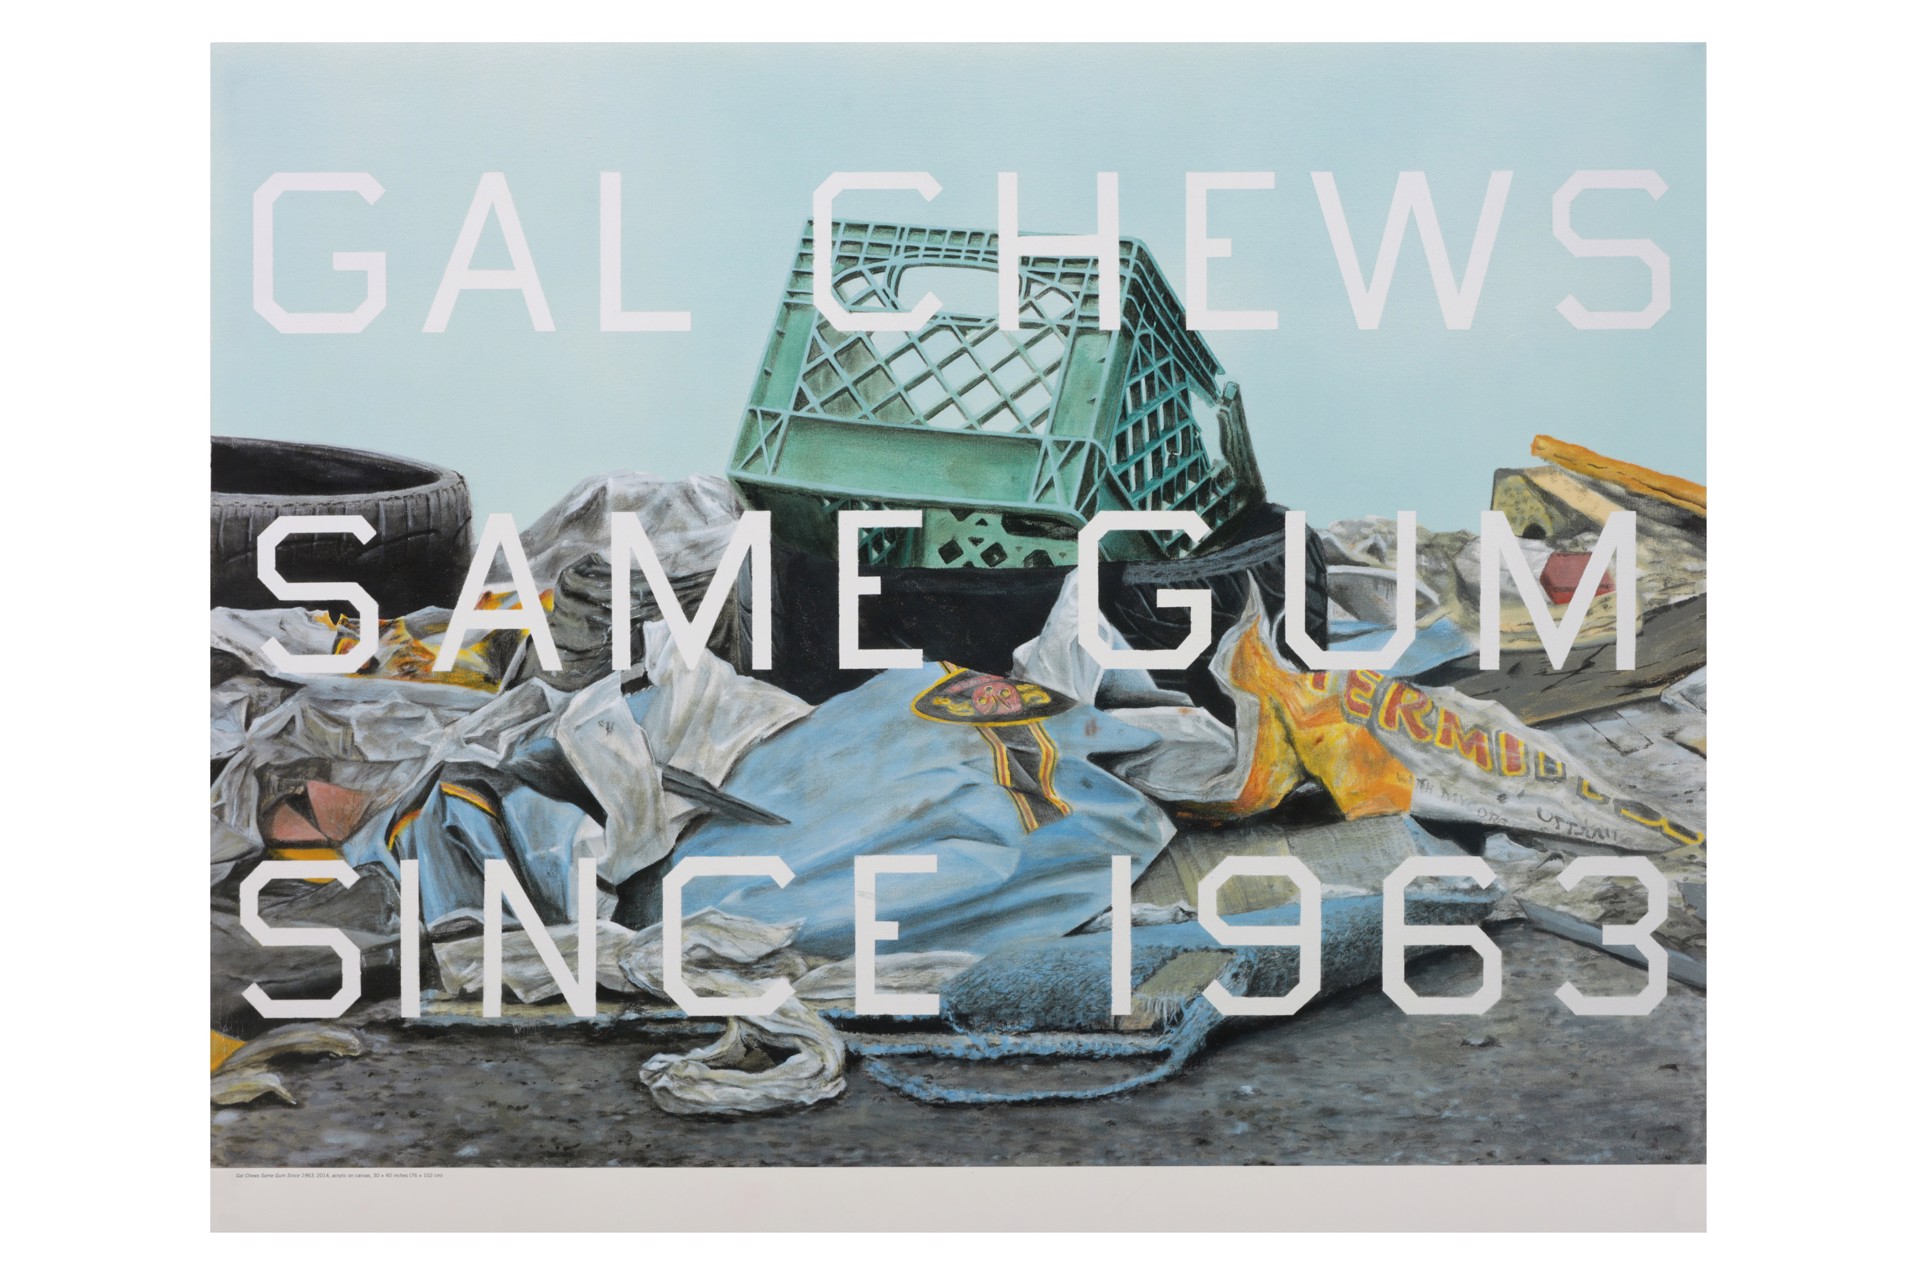 Gal chews same piece of gum since 1963 by Ed Ruscha